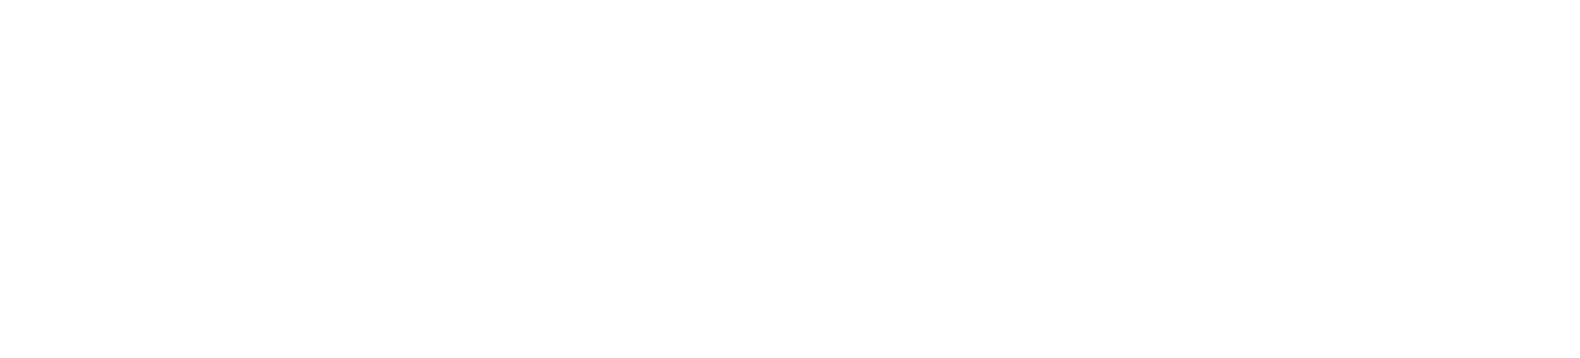 Logo TRAMAKO